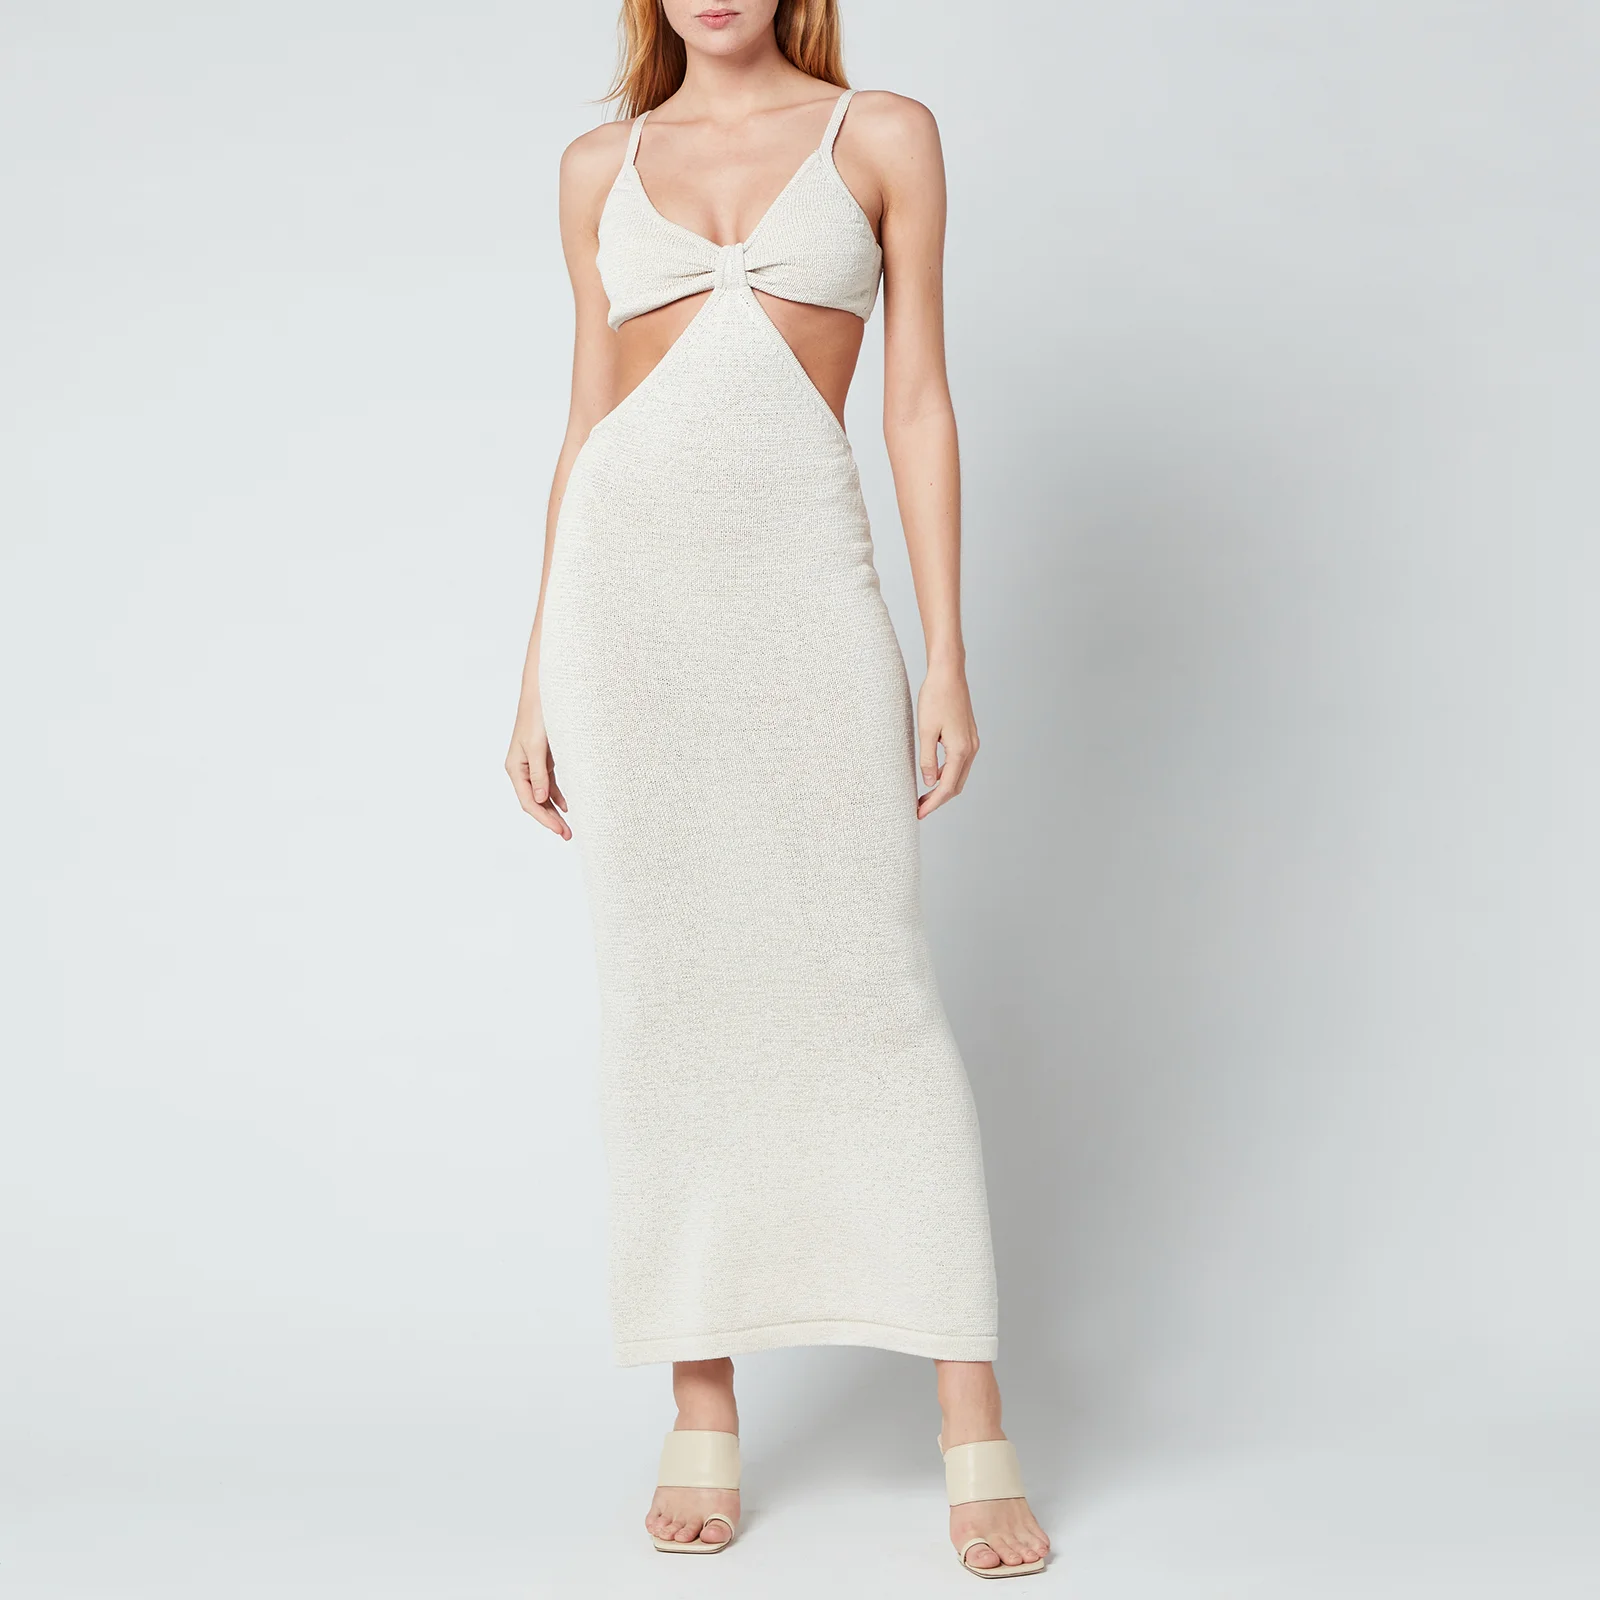 Cult Gaia Women's Serita Knit Dress - Off White Image 1